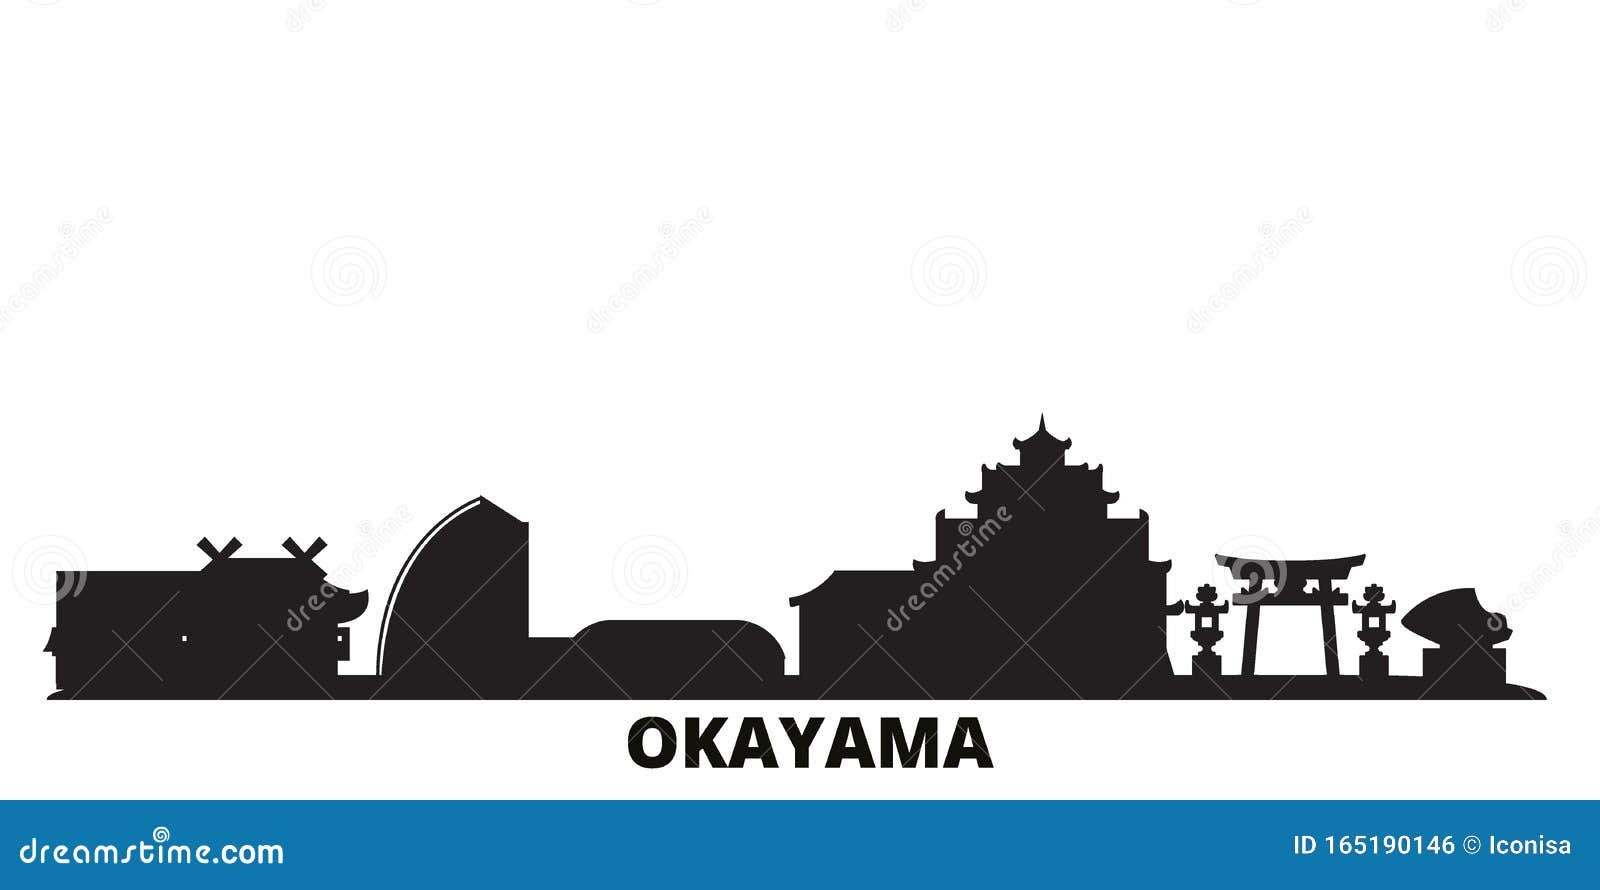 Japan, Okayama city skyline isolated vector illustration. Japan, Okayama travel black cityscape. Japan, Okayama city skyline isolated vector illustration. Japan, Okayama travel cityscape with landmarks